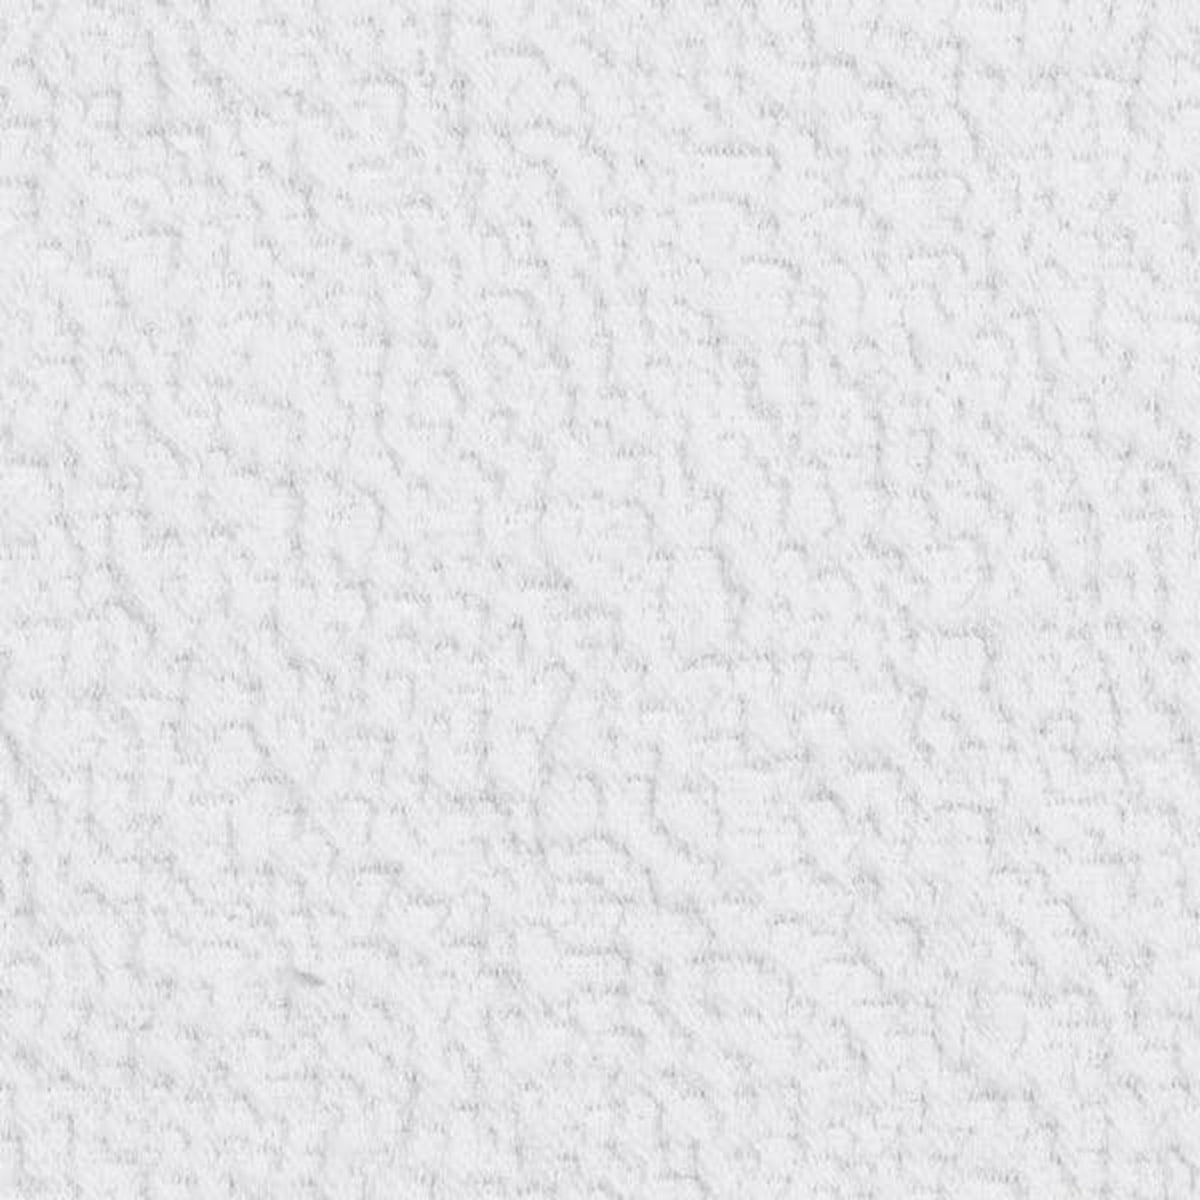 Swatch Sample of Matouk Malibu Bedding in Color White